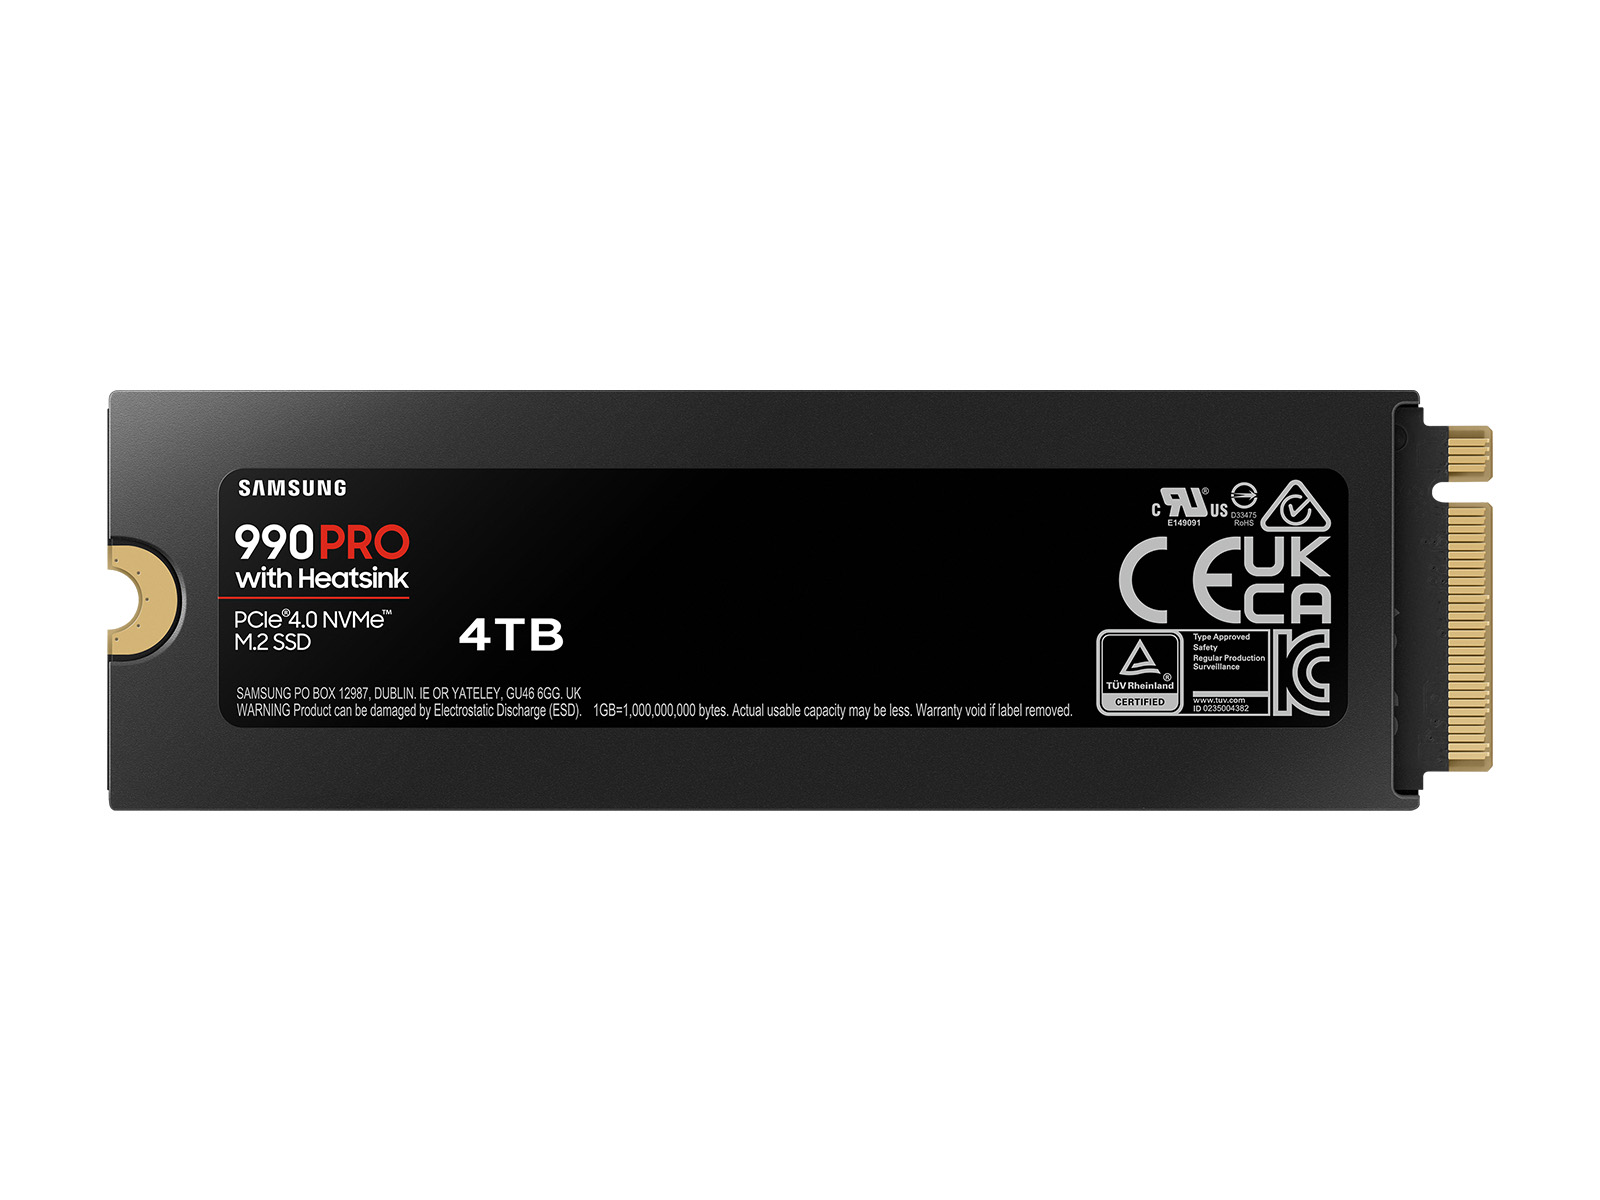 Samsung 4TB 990 Pro PCIe 4.0 X4 M.2 Internal SSD with Heatsink